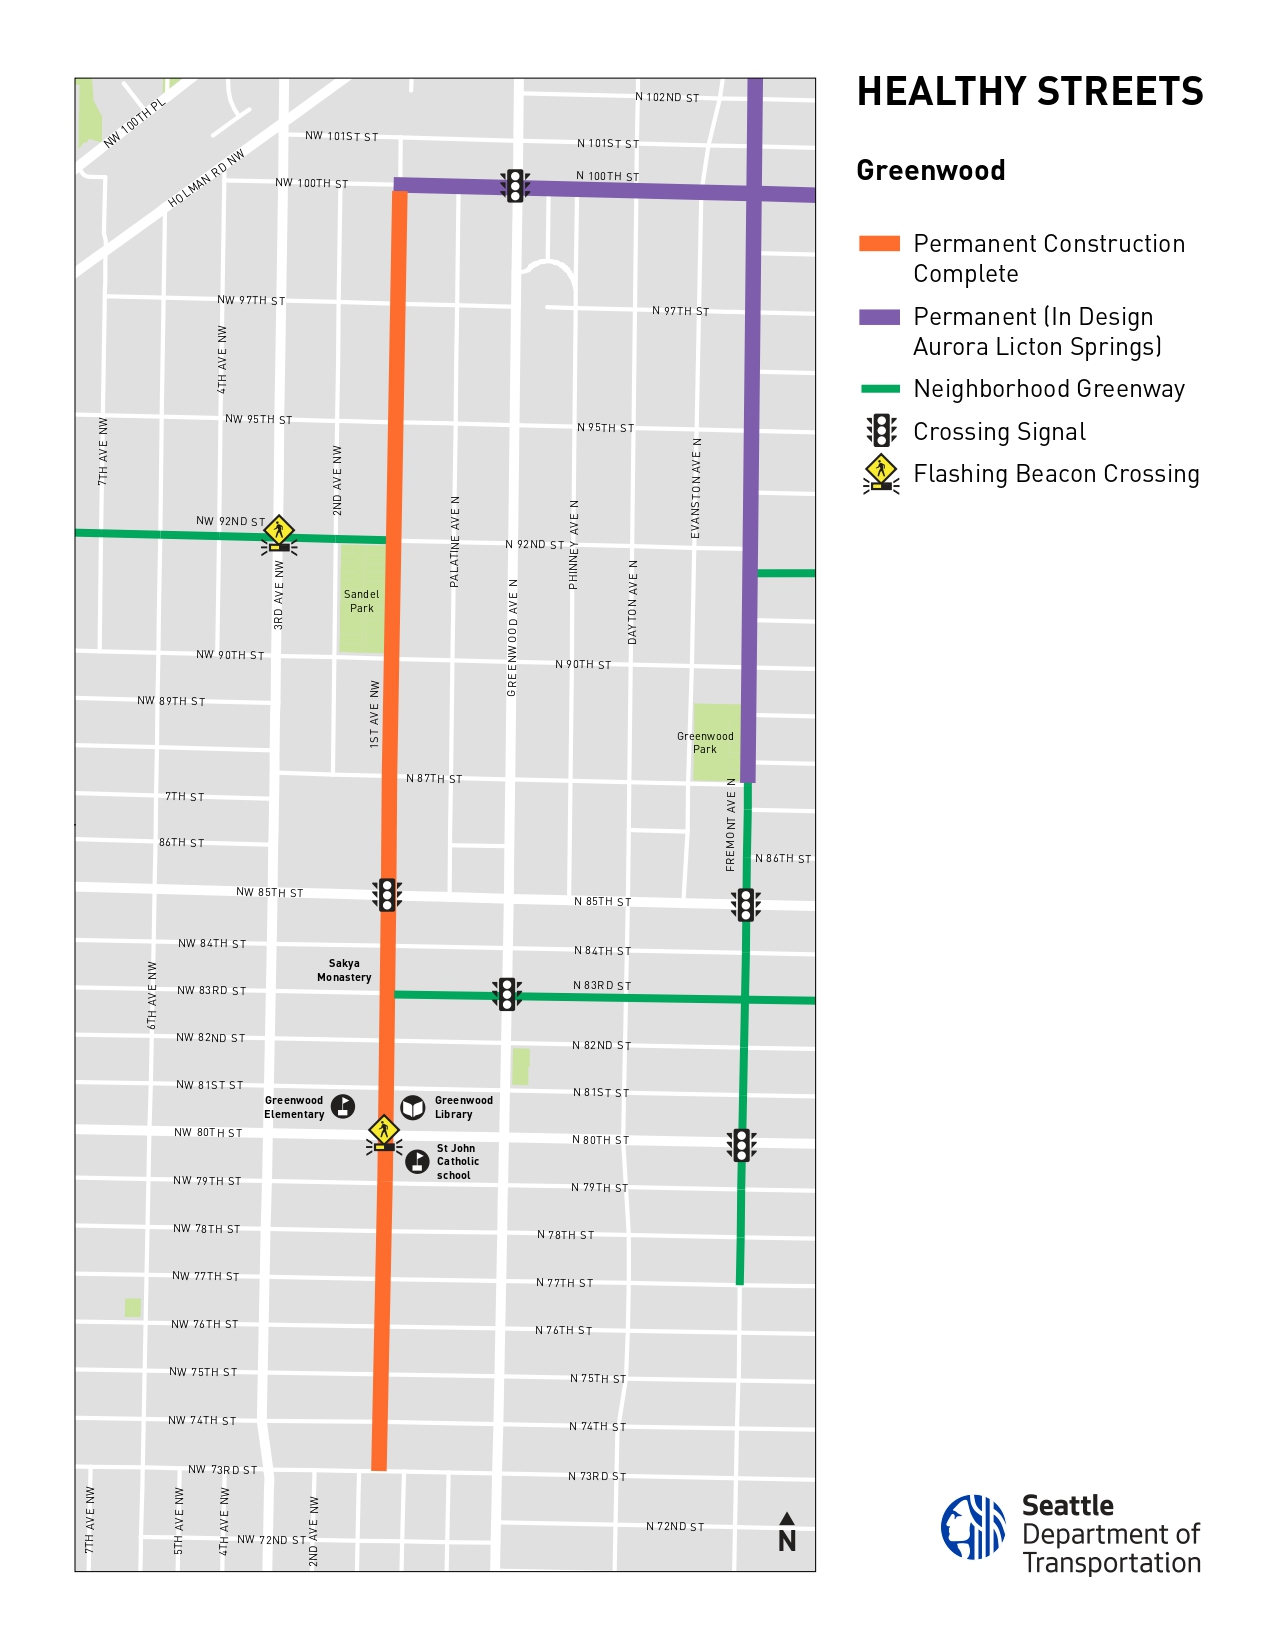 Greenwood Healthy Street Map